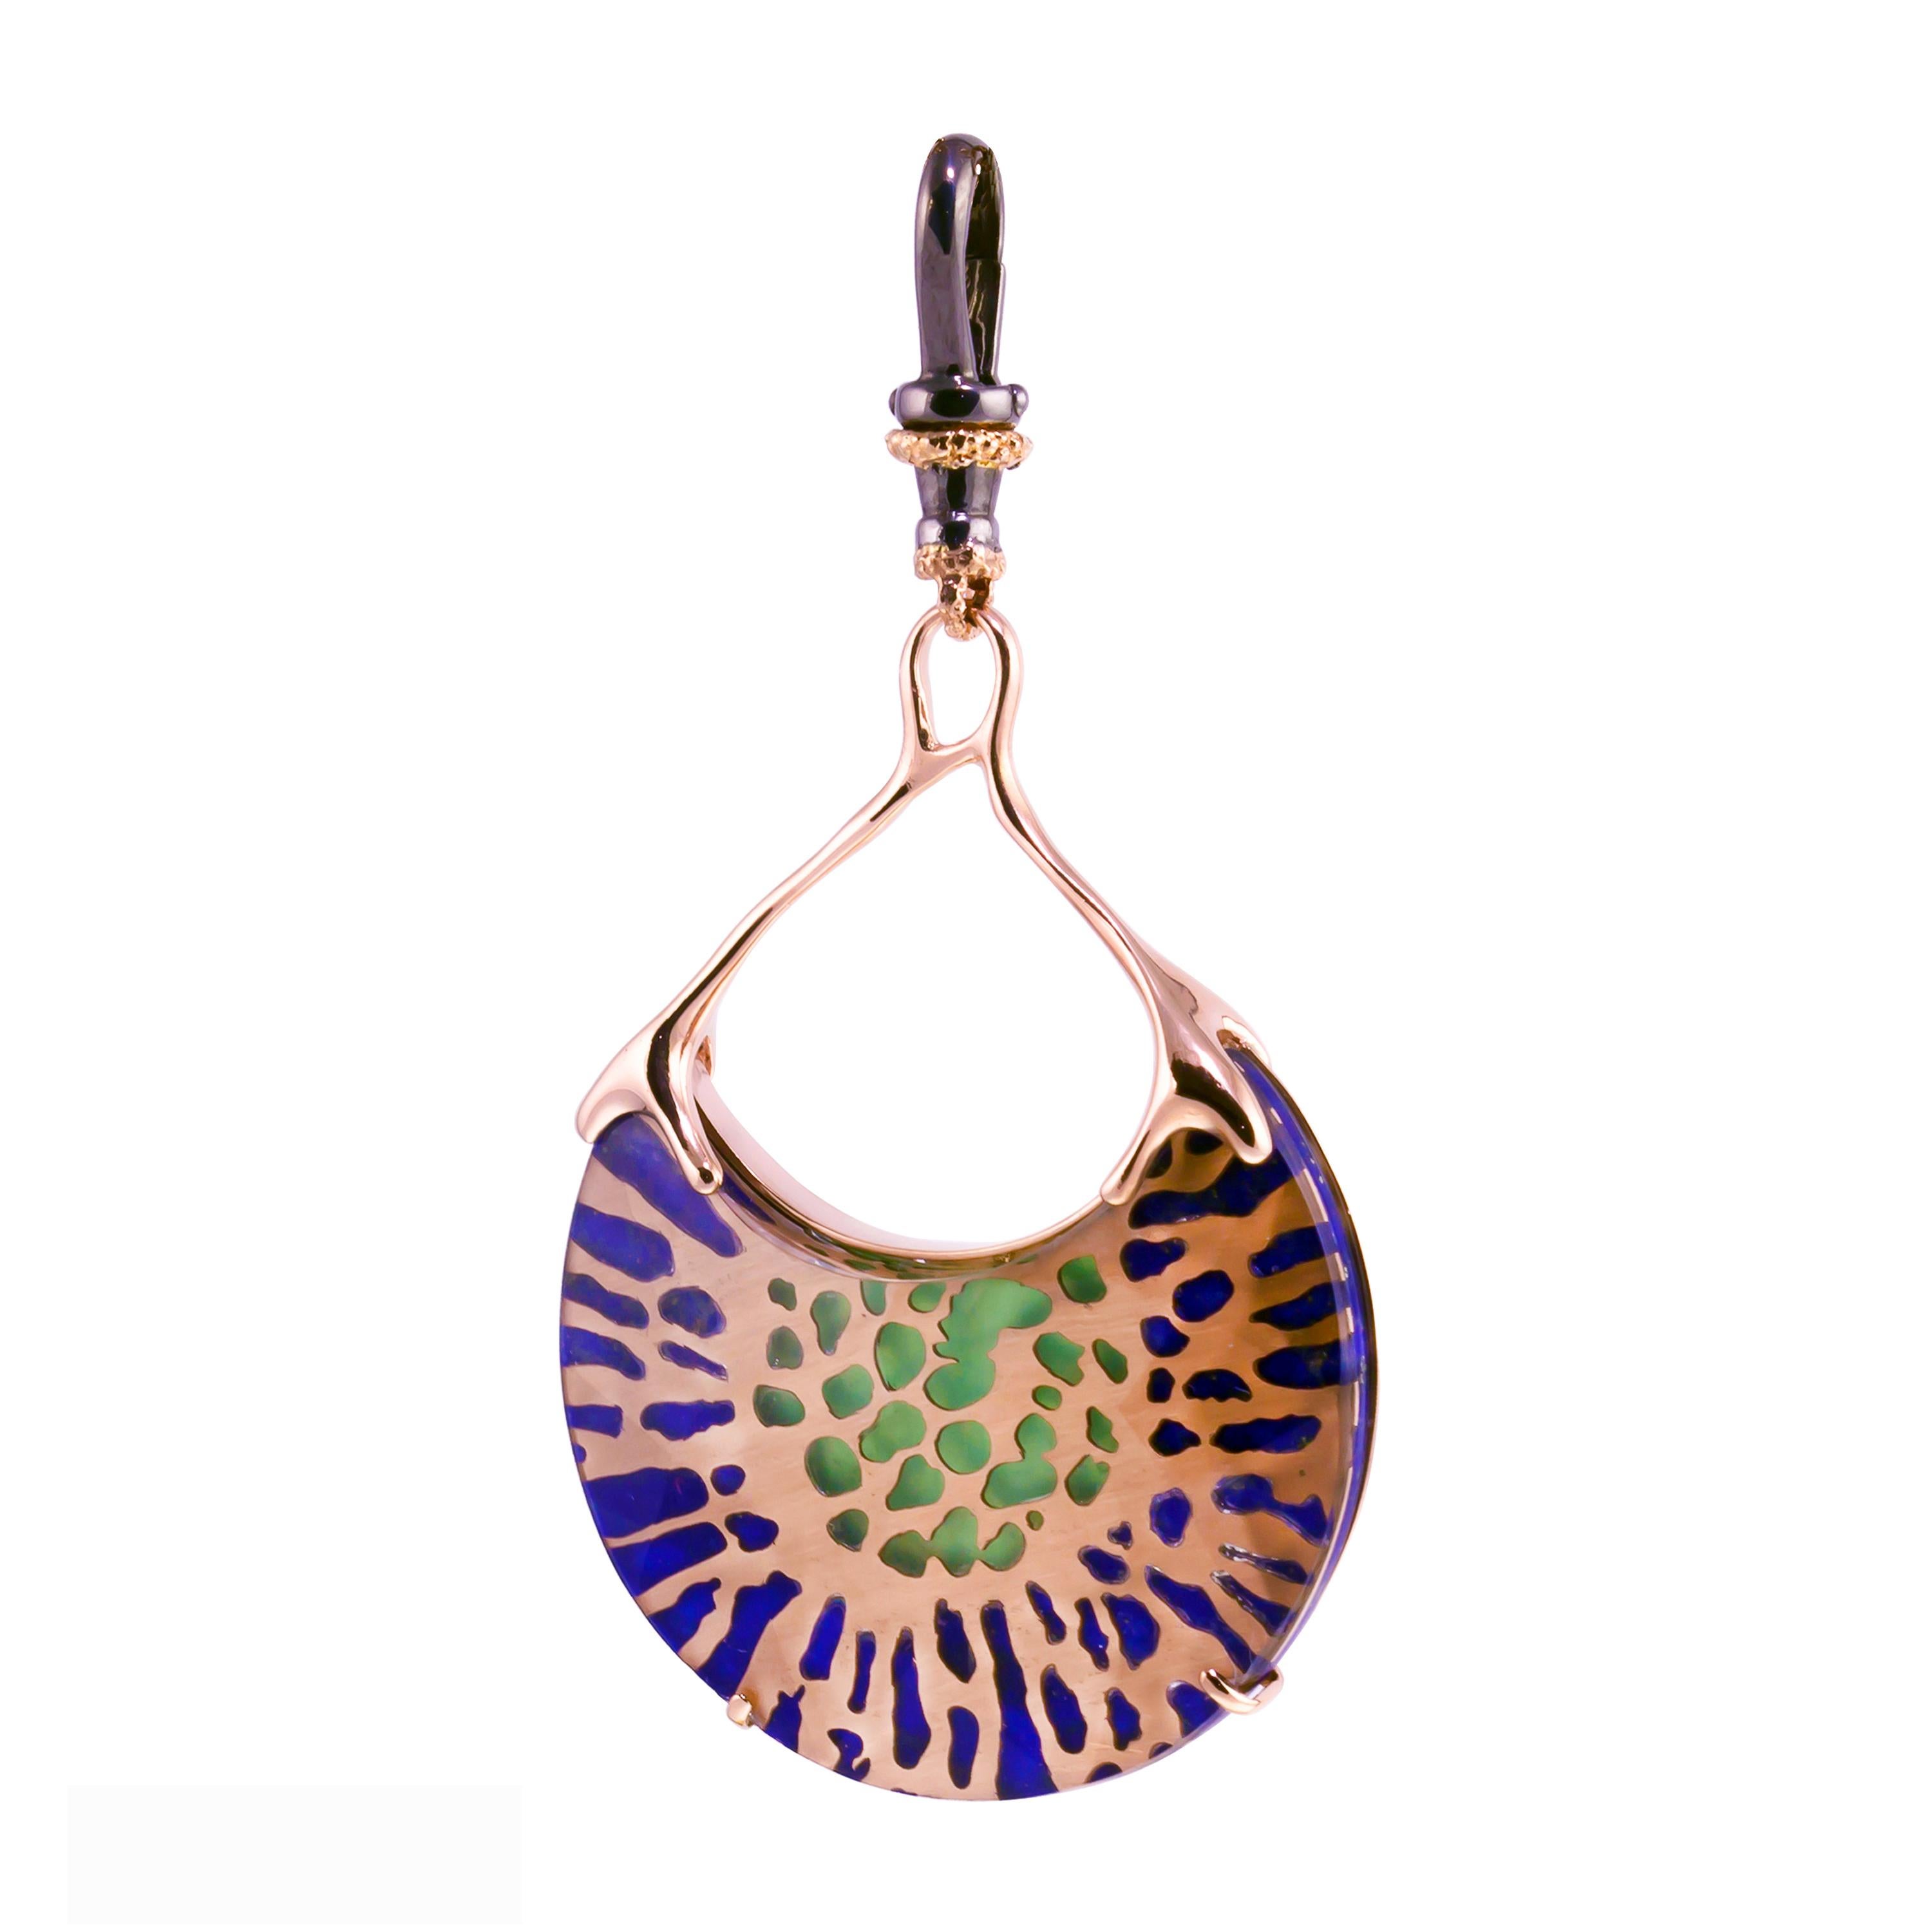 18 karat rose gold Pendant chain Necklace. The pendat is designed using  